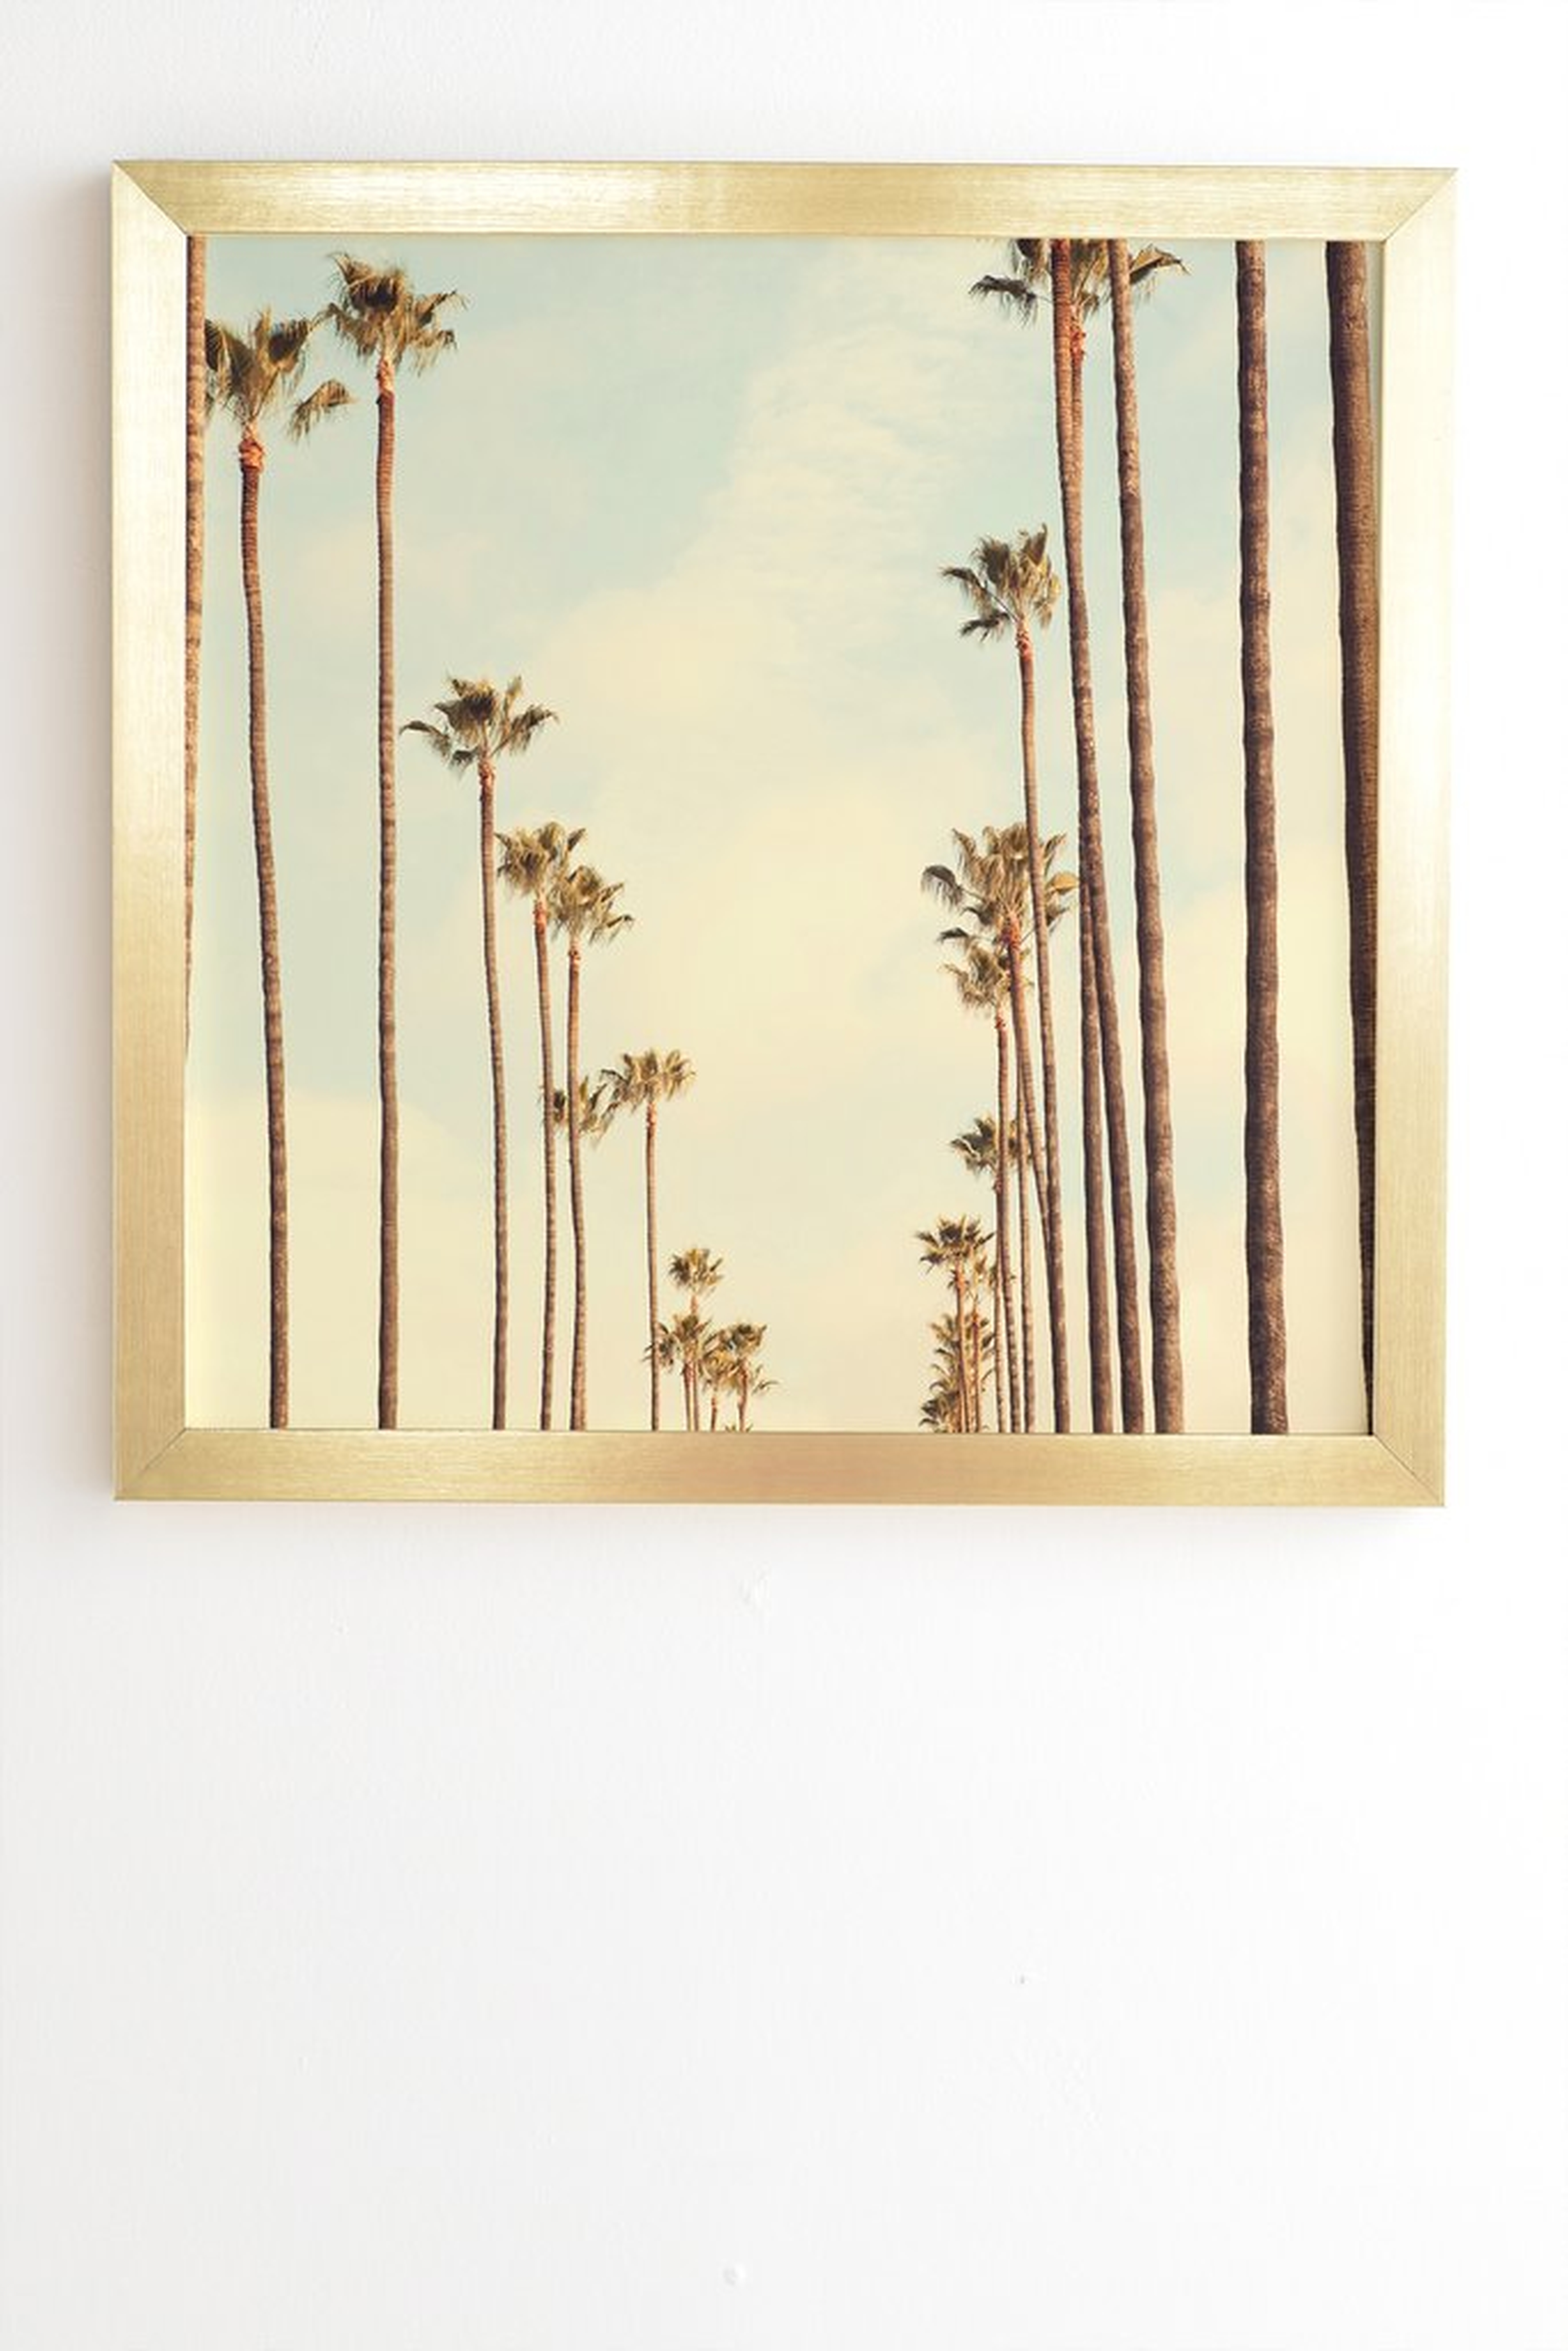 Los Angeles Palms - Wander Print Co.